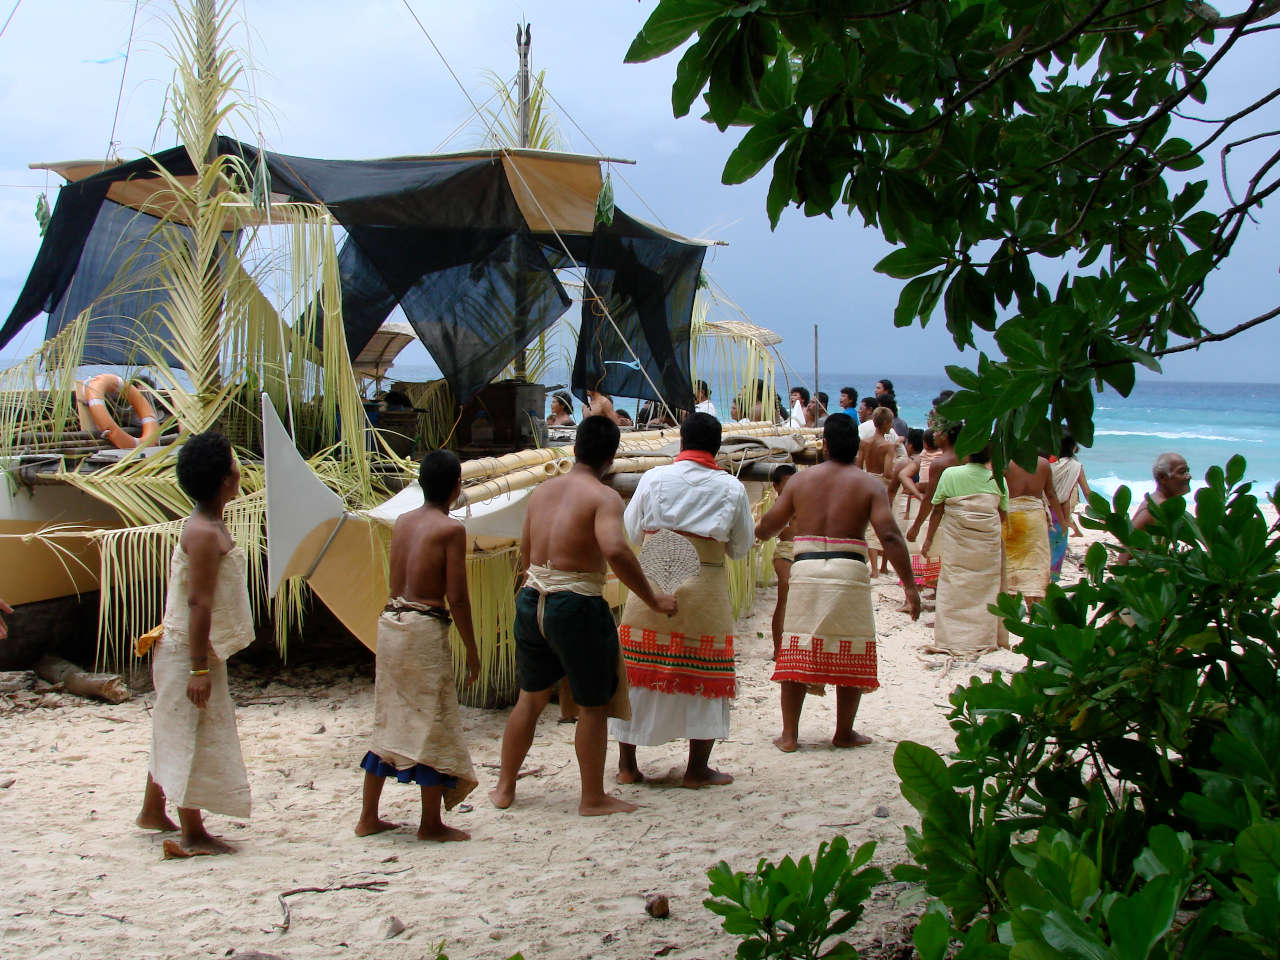 People wearing sarongs walking around a beached double canoe